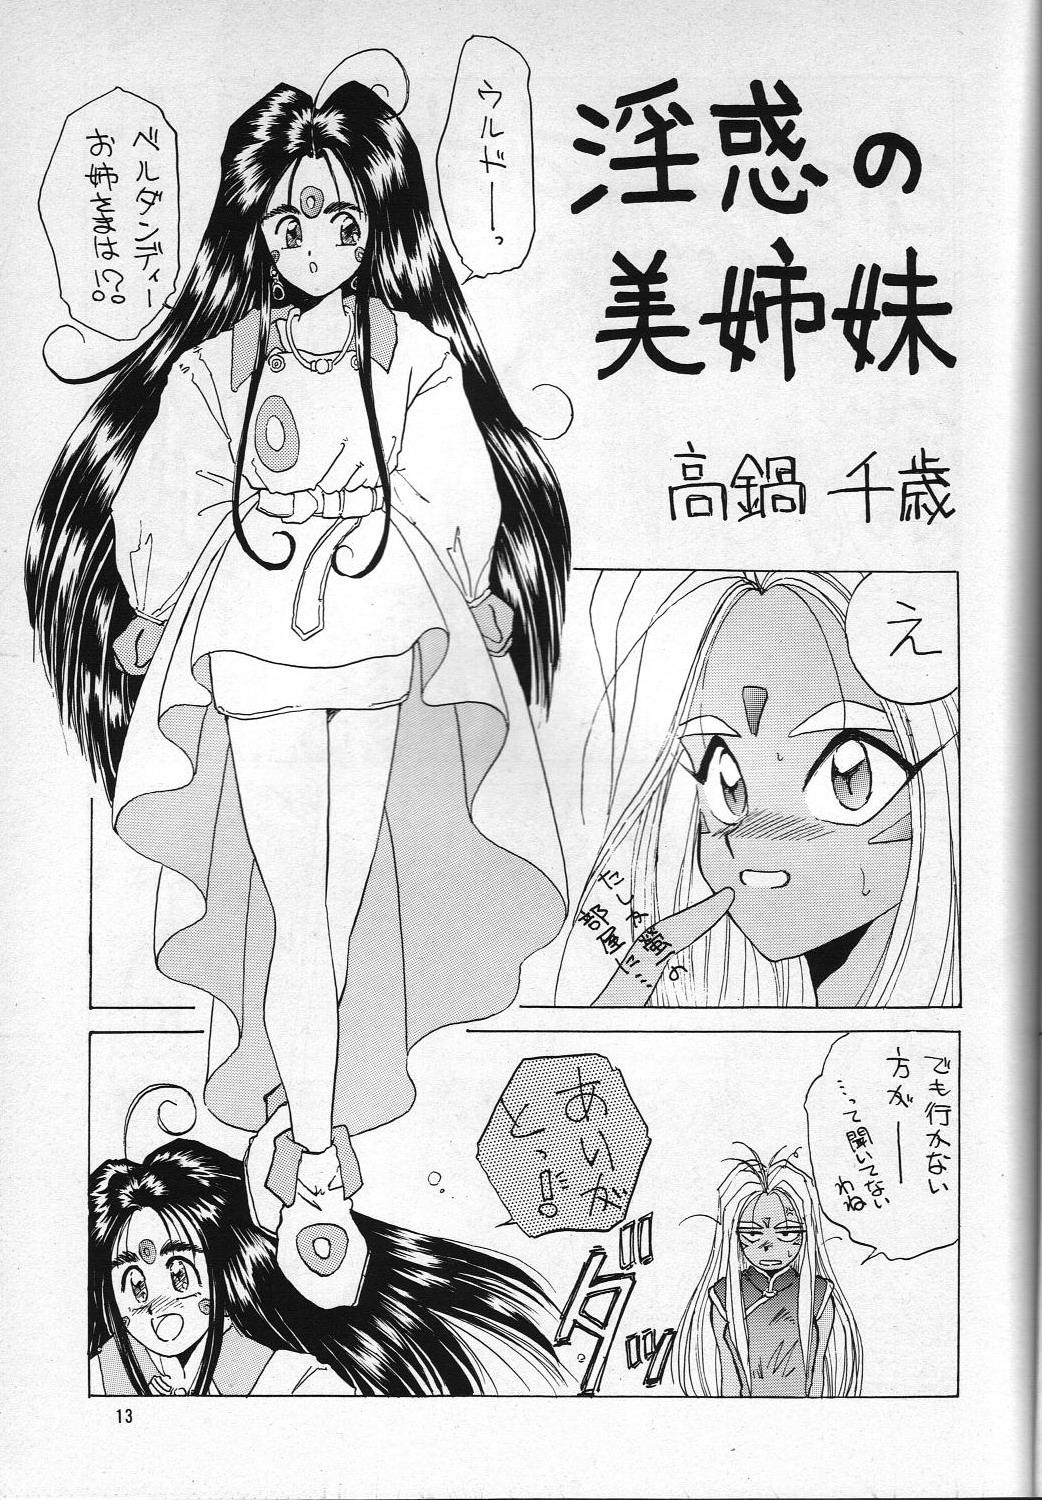 Legs H VOLUME 1 - Ah my goddess Darkstalkers Fushigi no umi no nadia Sonic soldier borgman Bastard Idol densetsu eriko Time - Page 12